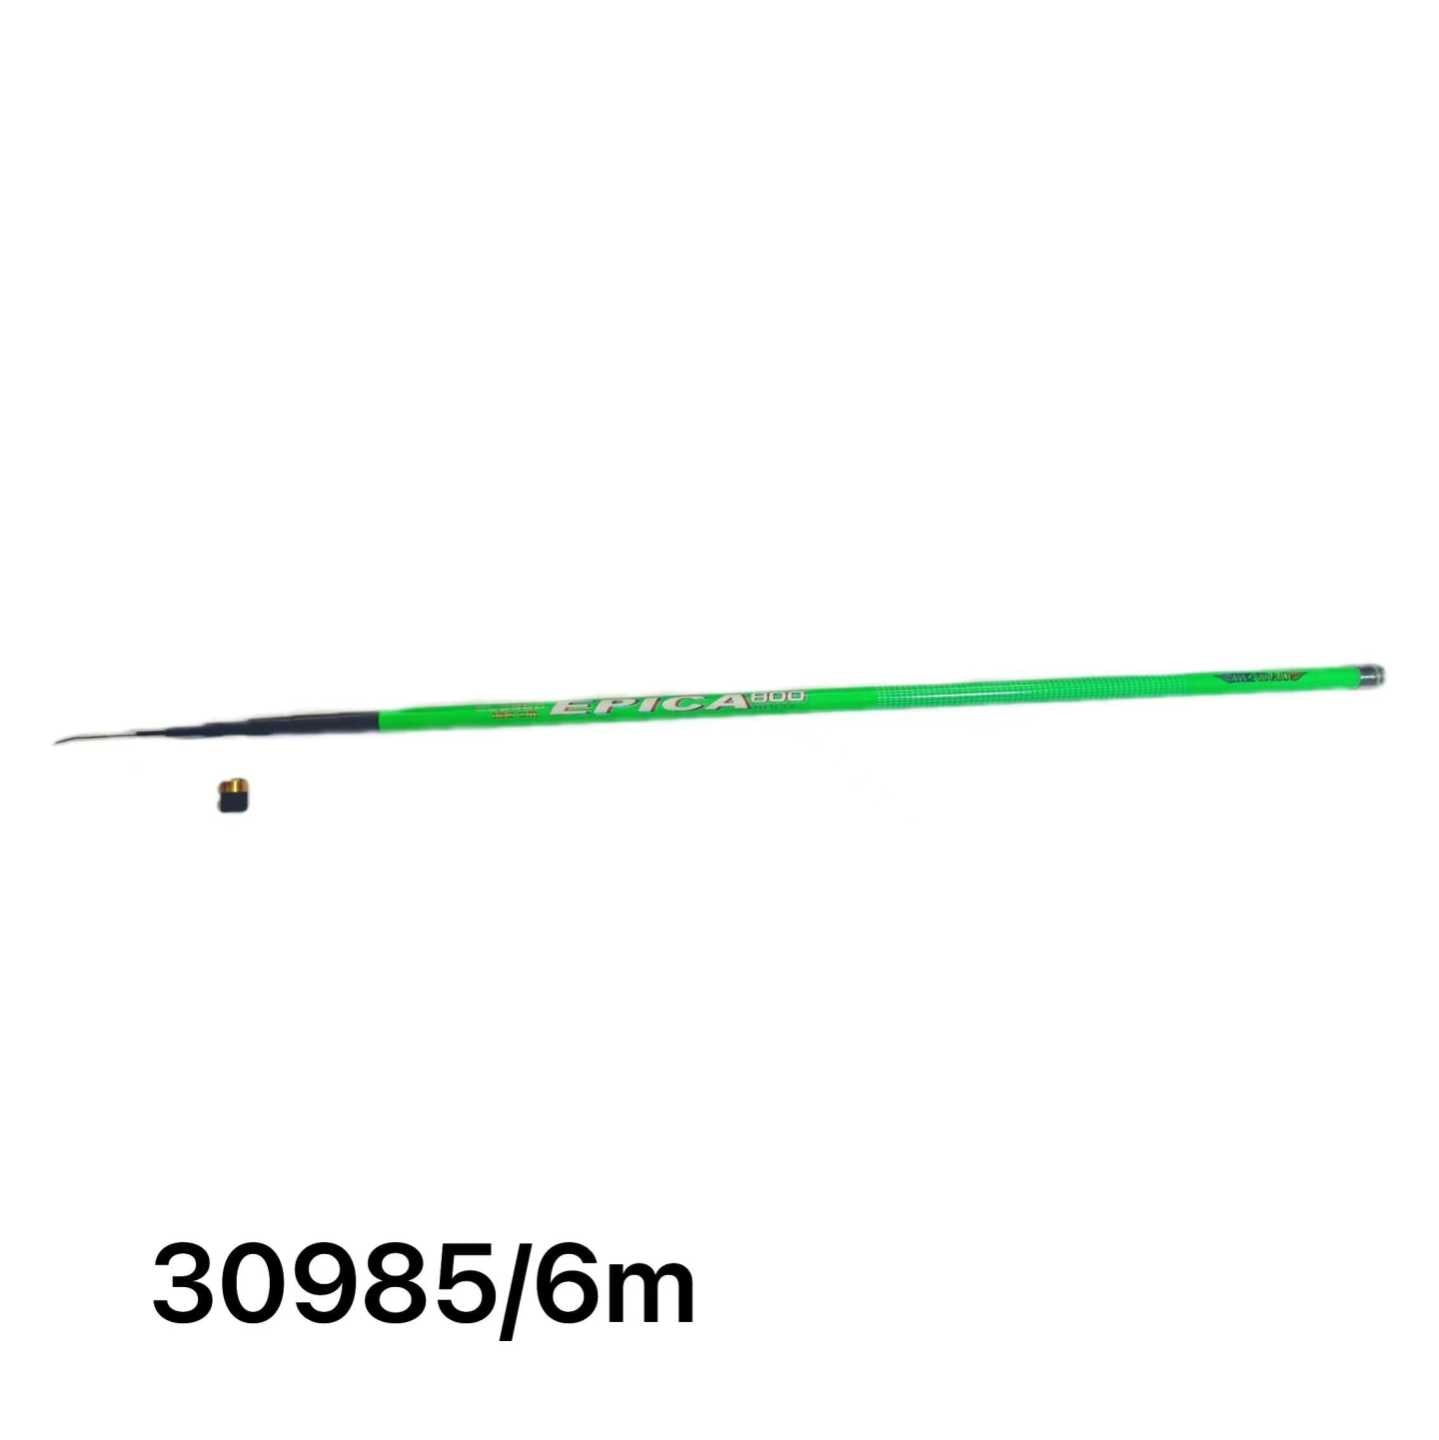 Fishing rod - Telescopic - 2.4m - 30895